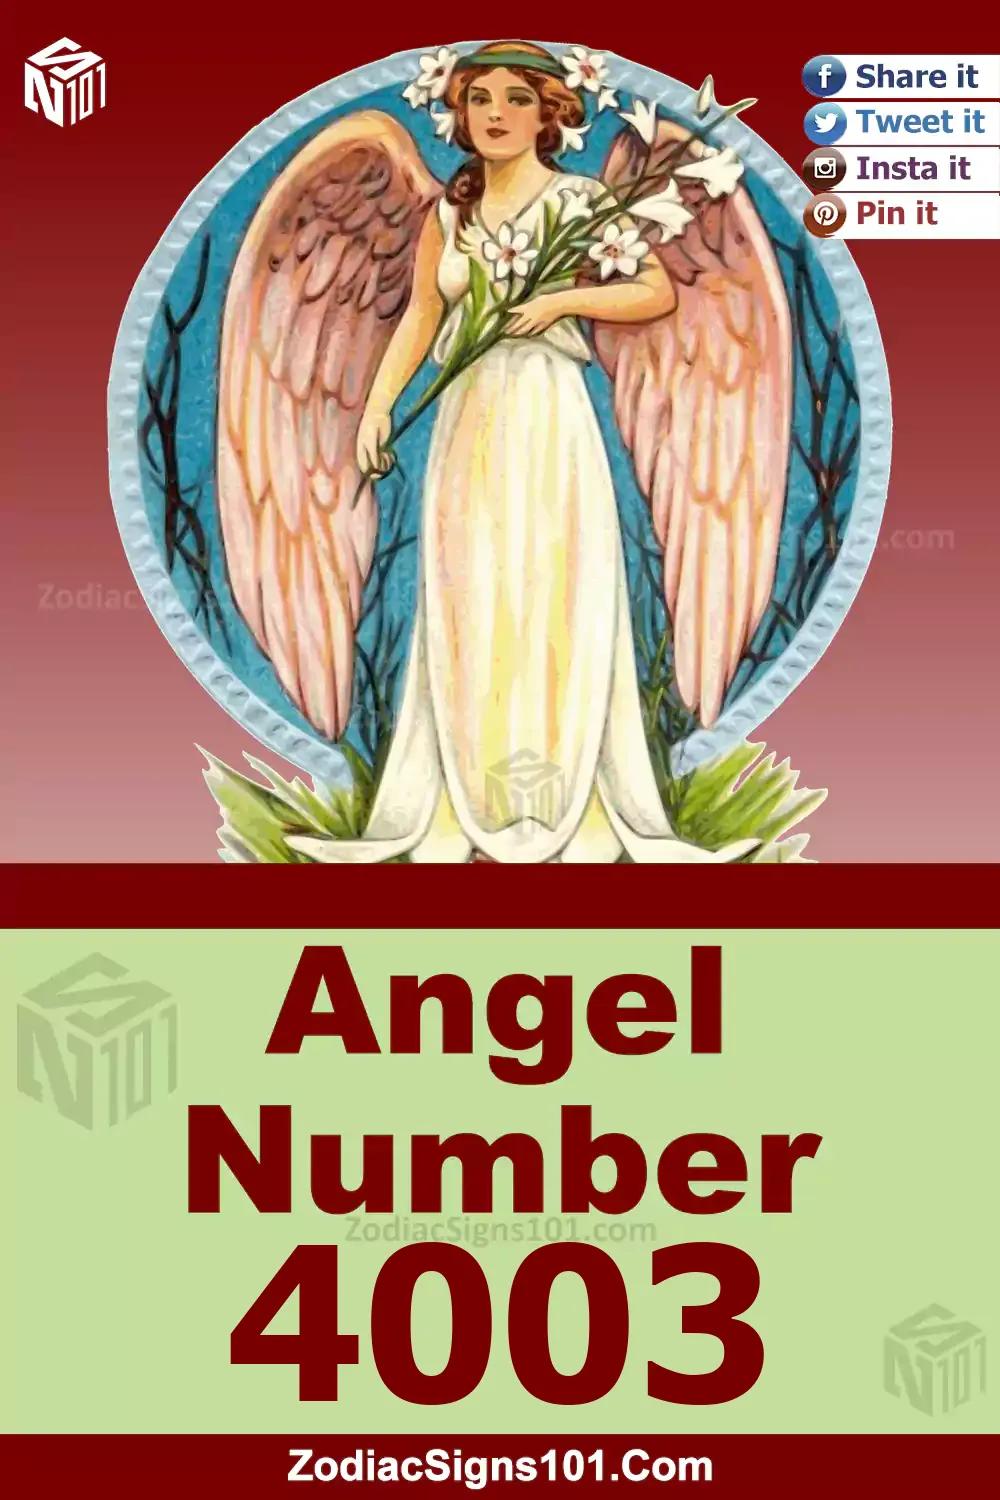 4003-Angel-Number-Meaning.jpg